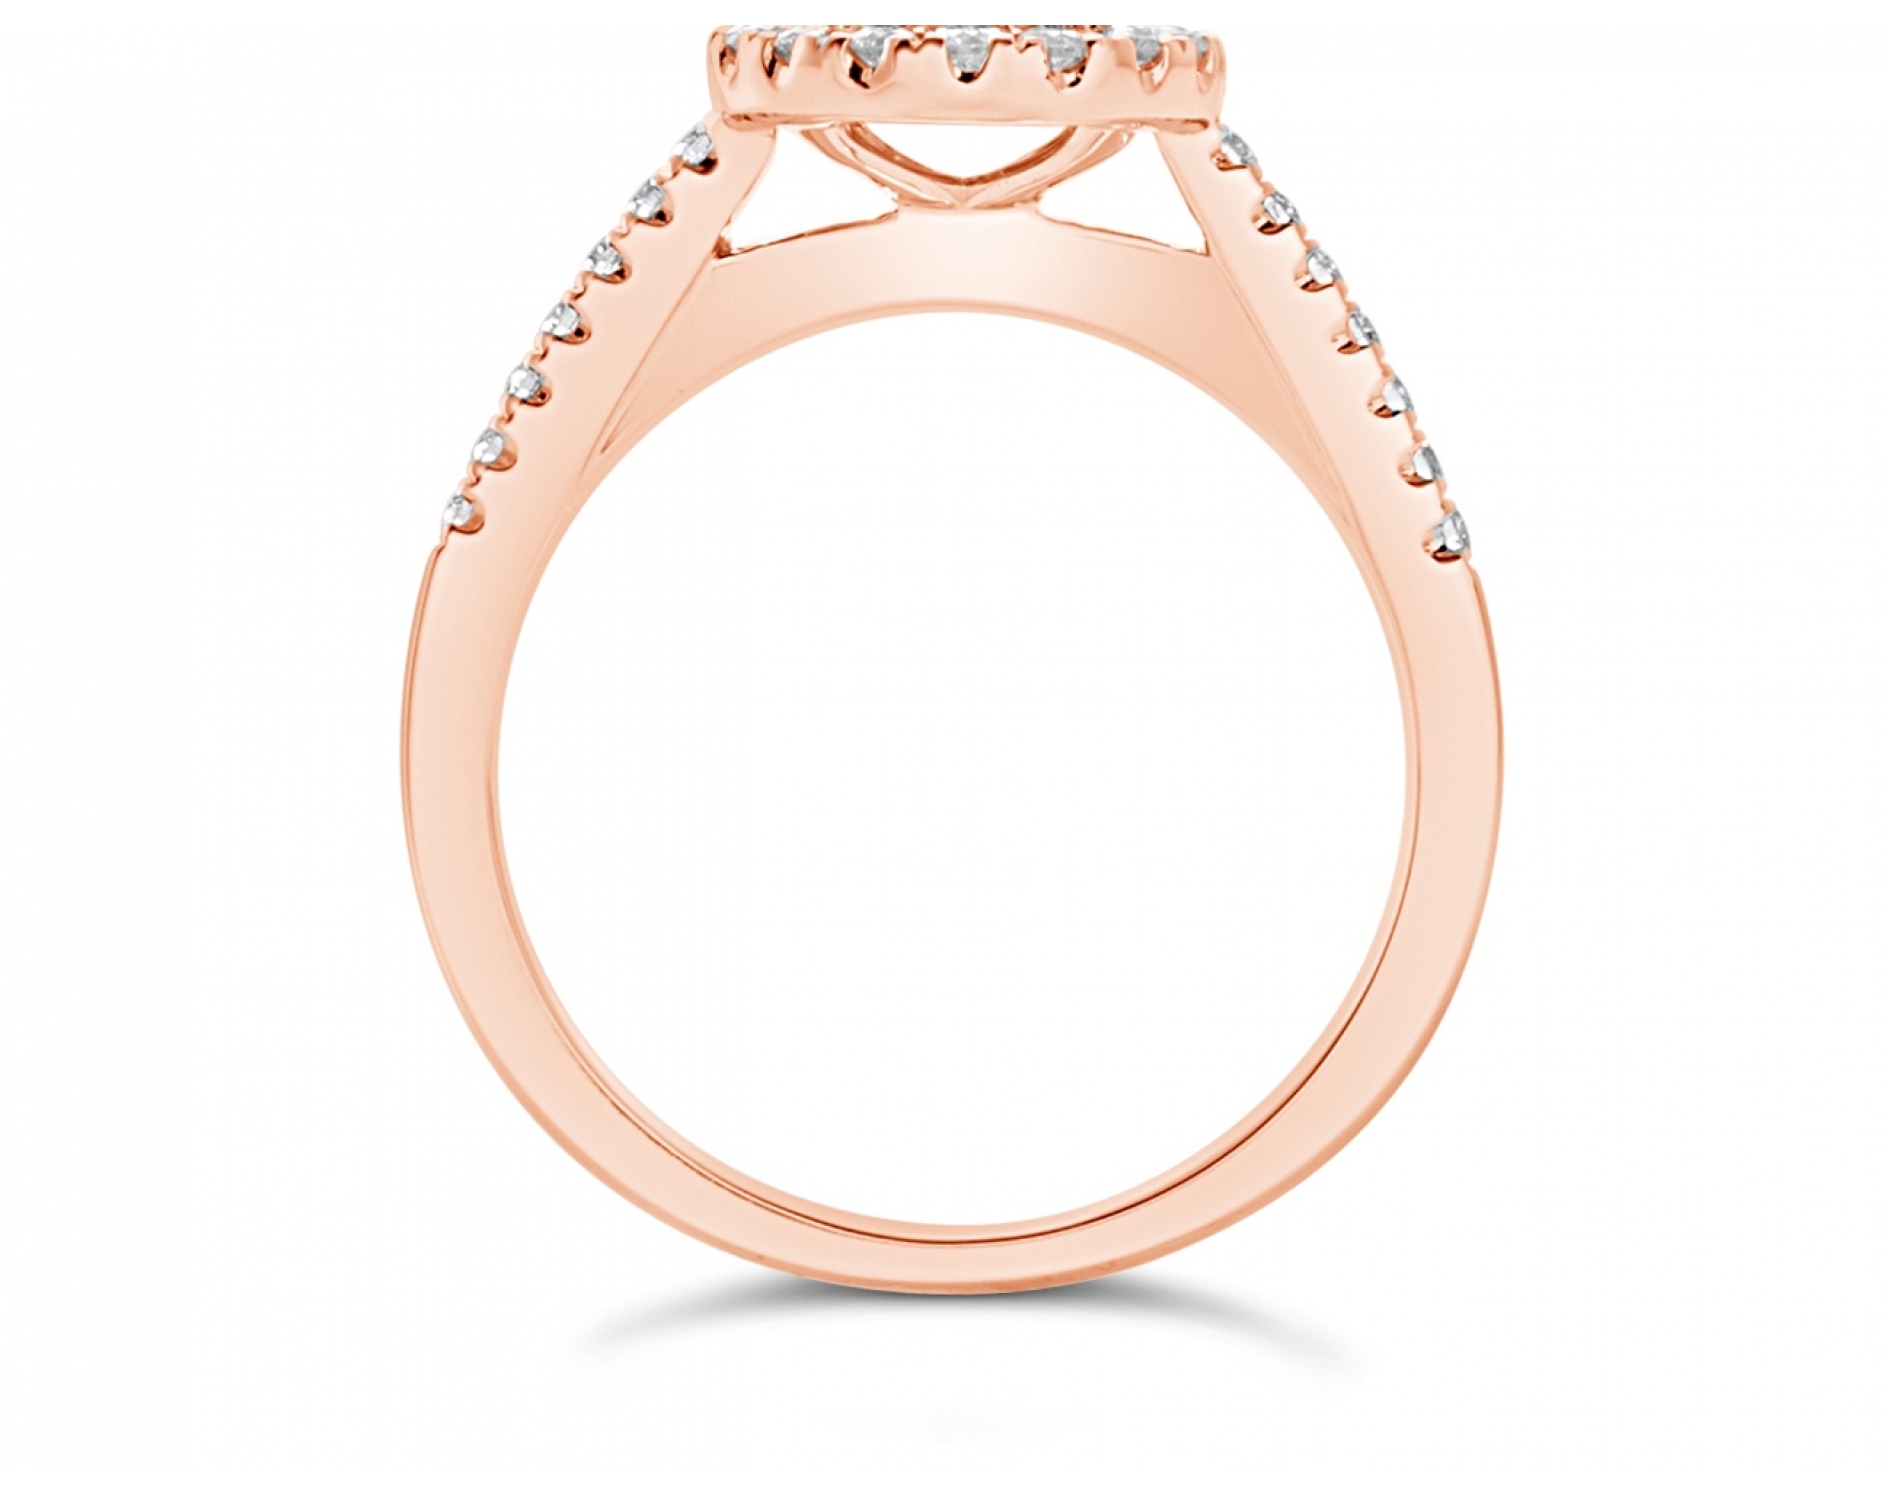 18k rose gold halo illusion set engagement ring with pave set sidestones Photos & images